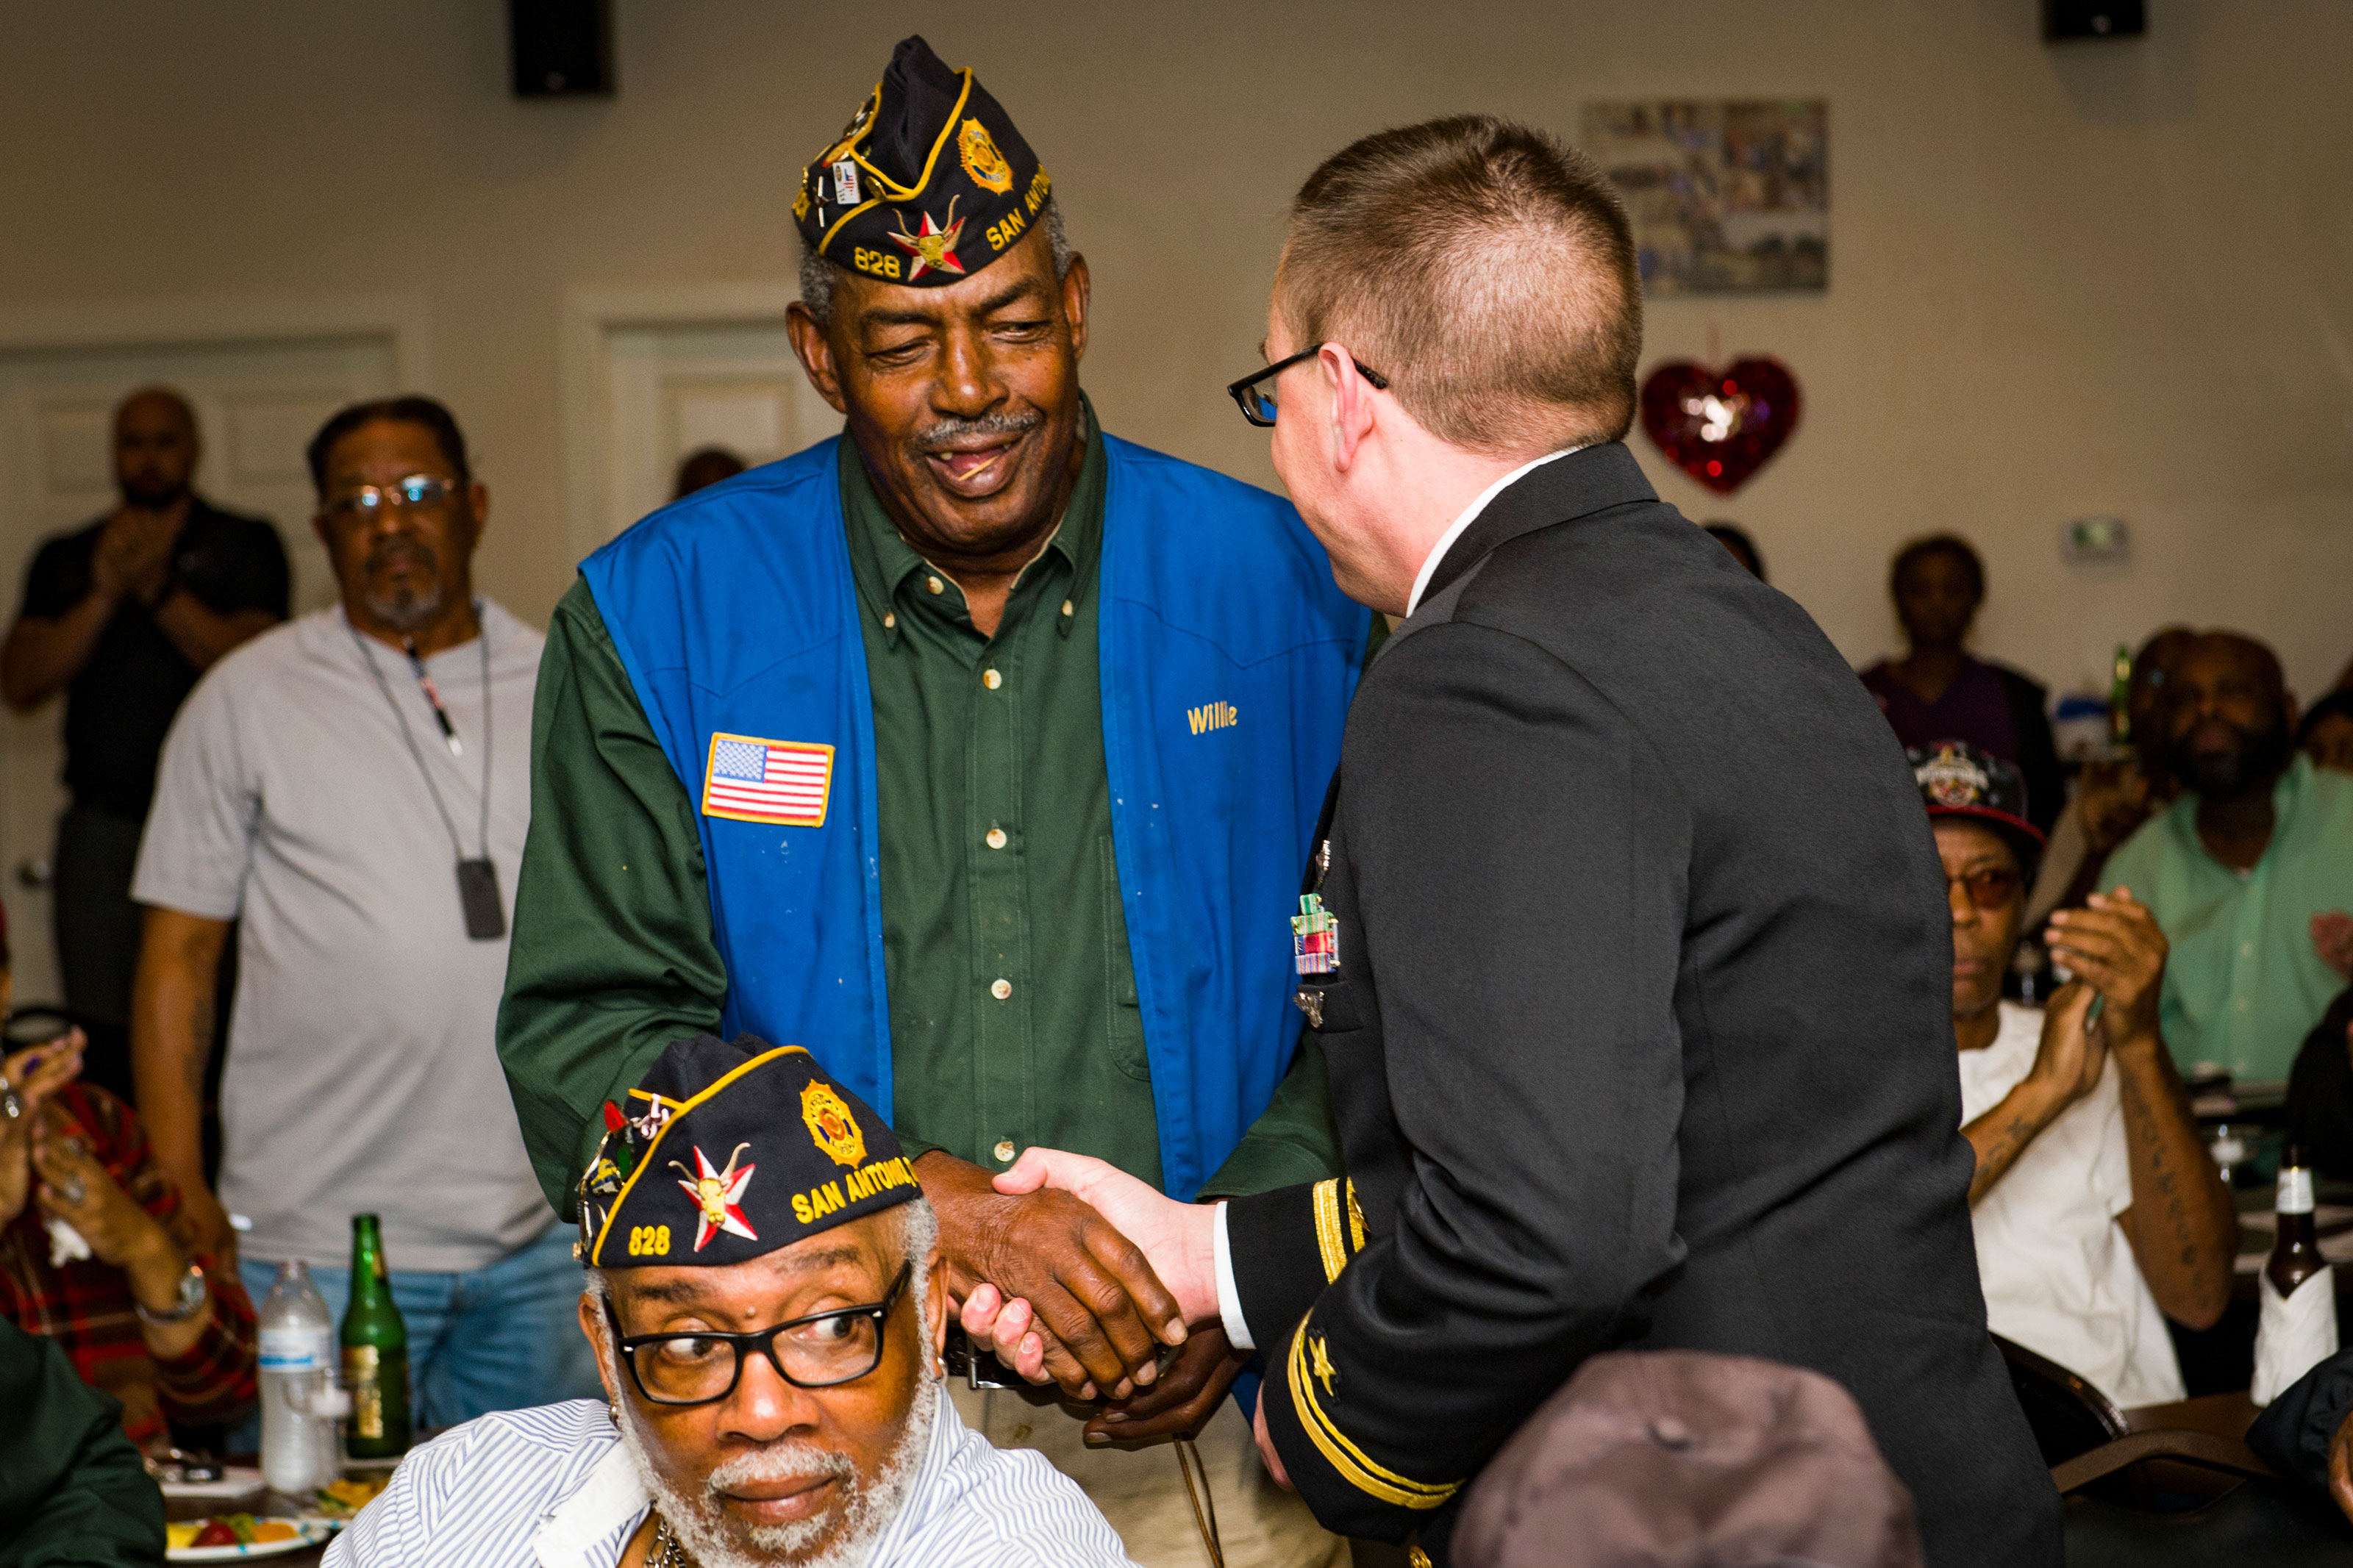 Lt. j.g. Mack Jamieson gives a pin to an American Legion Fred Brock Post No. 828 Vietnam war veteran as part of San Antonio Navy Week. (U.S. Navy/Specialist 3rd Class Casey J. Hopkins)